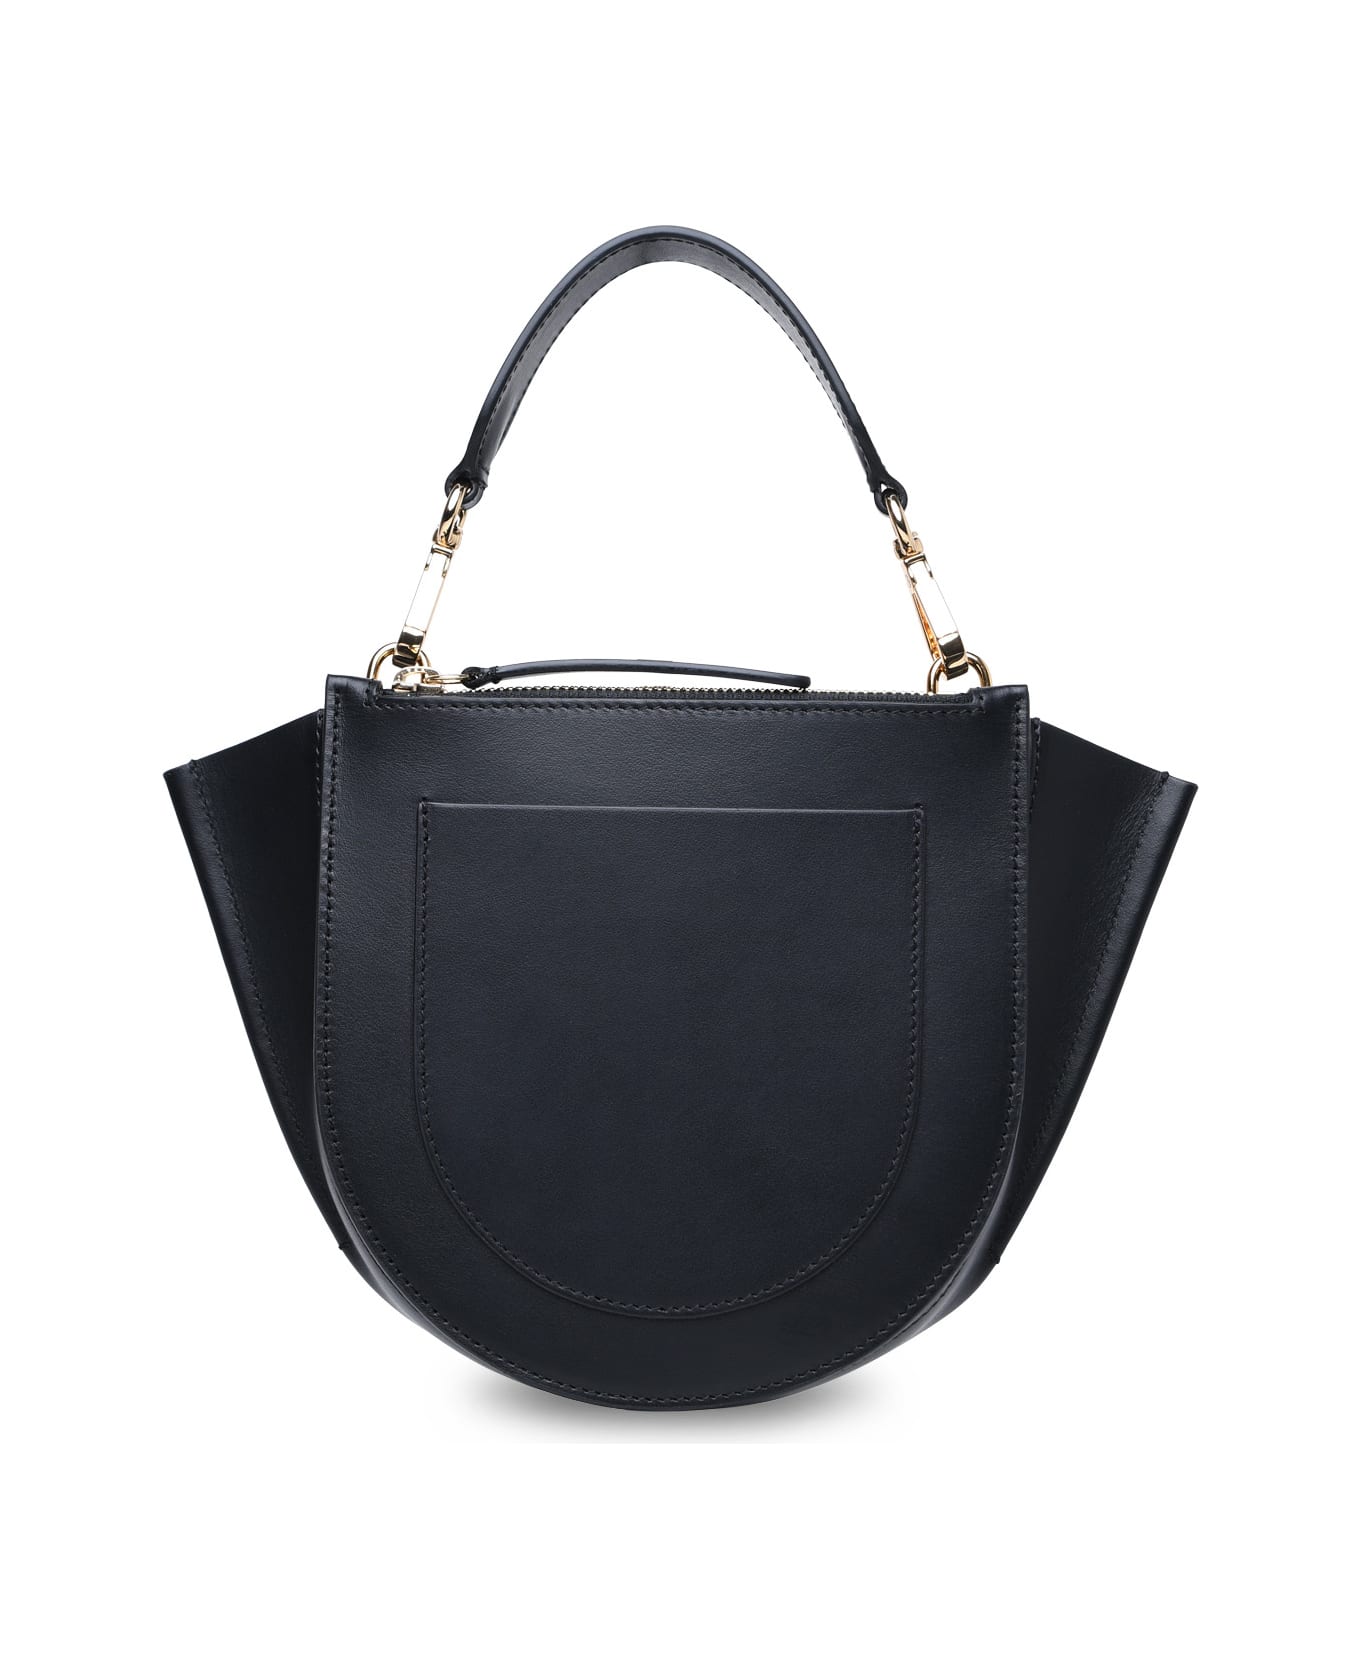 Wandler Hortensia Black Leather Bag - Black